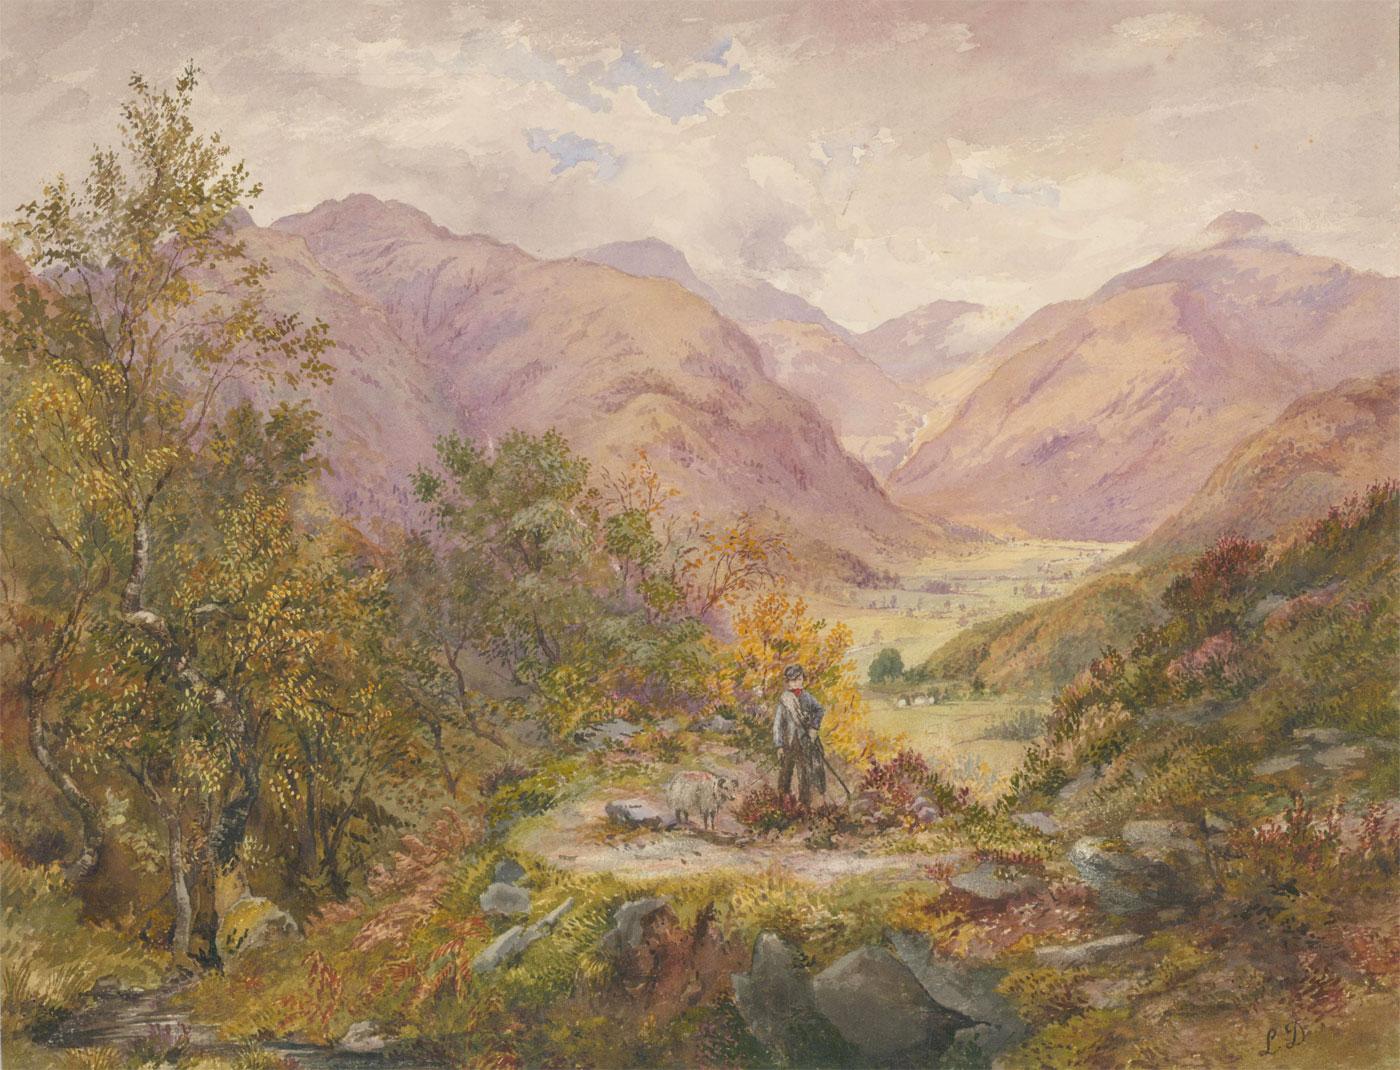 Unknown Landscape Art - L. Drayton - 19th Century Watercolour, Shepherd & His Sheep